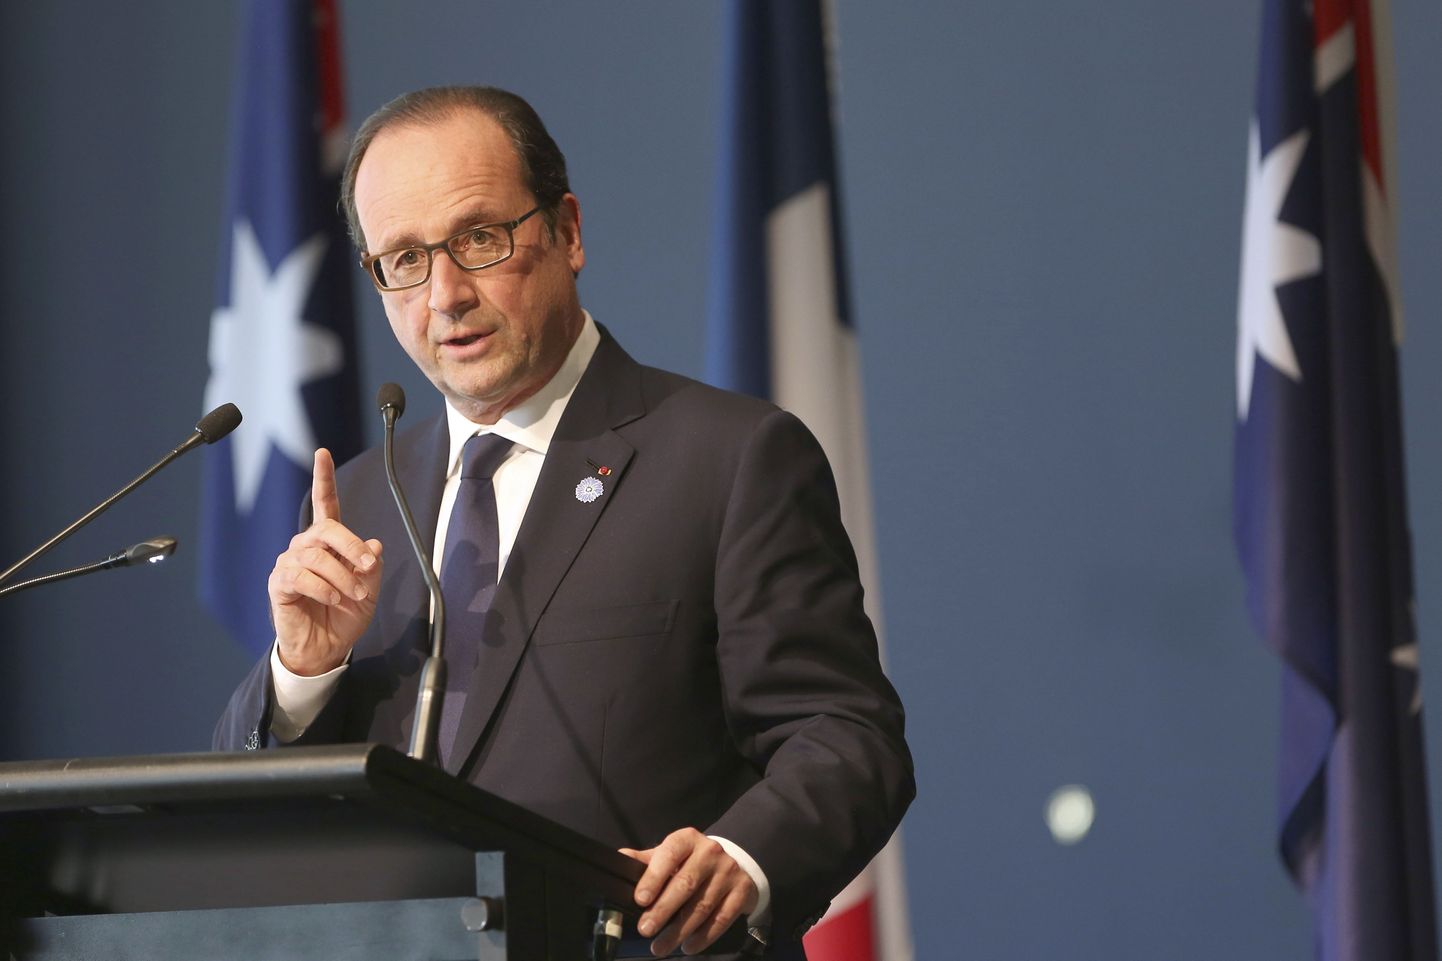 Prantsuse president François Hollande Canberras asuvas Australia Rahvusgaleriis 19. novembril kõnet pidamas.